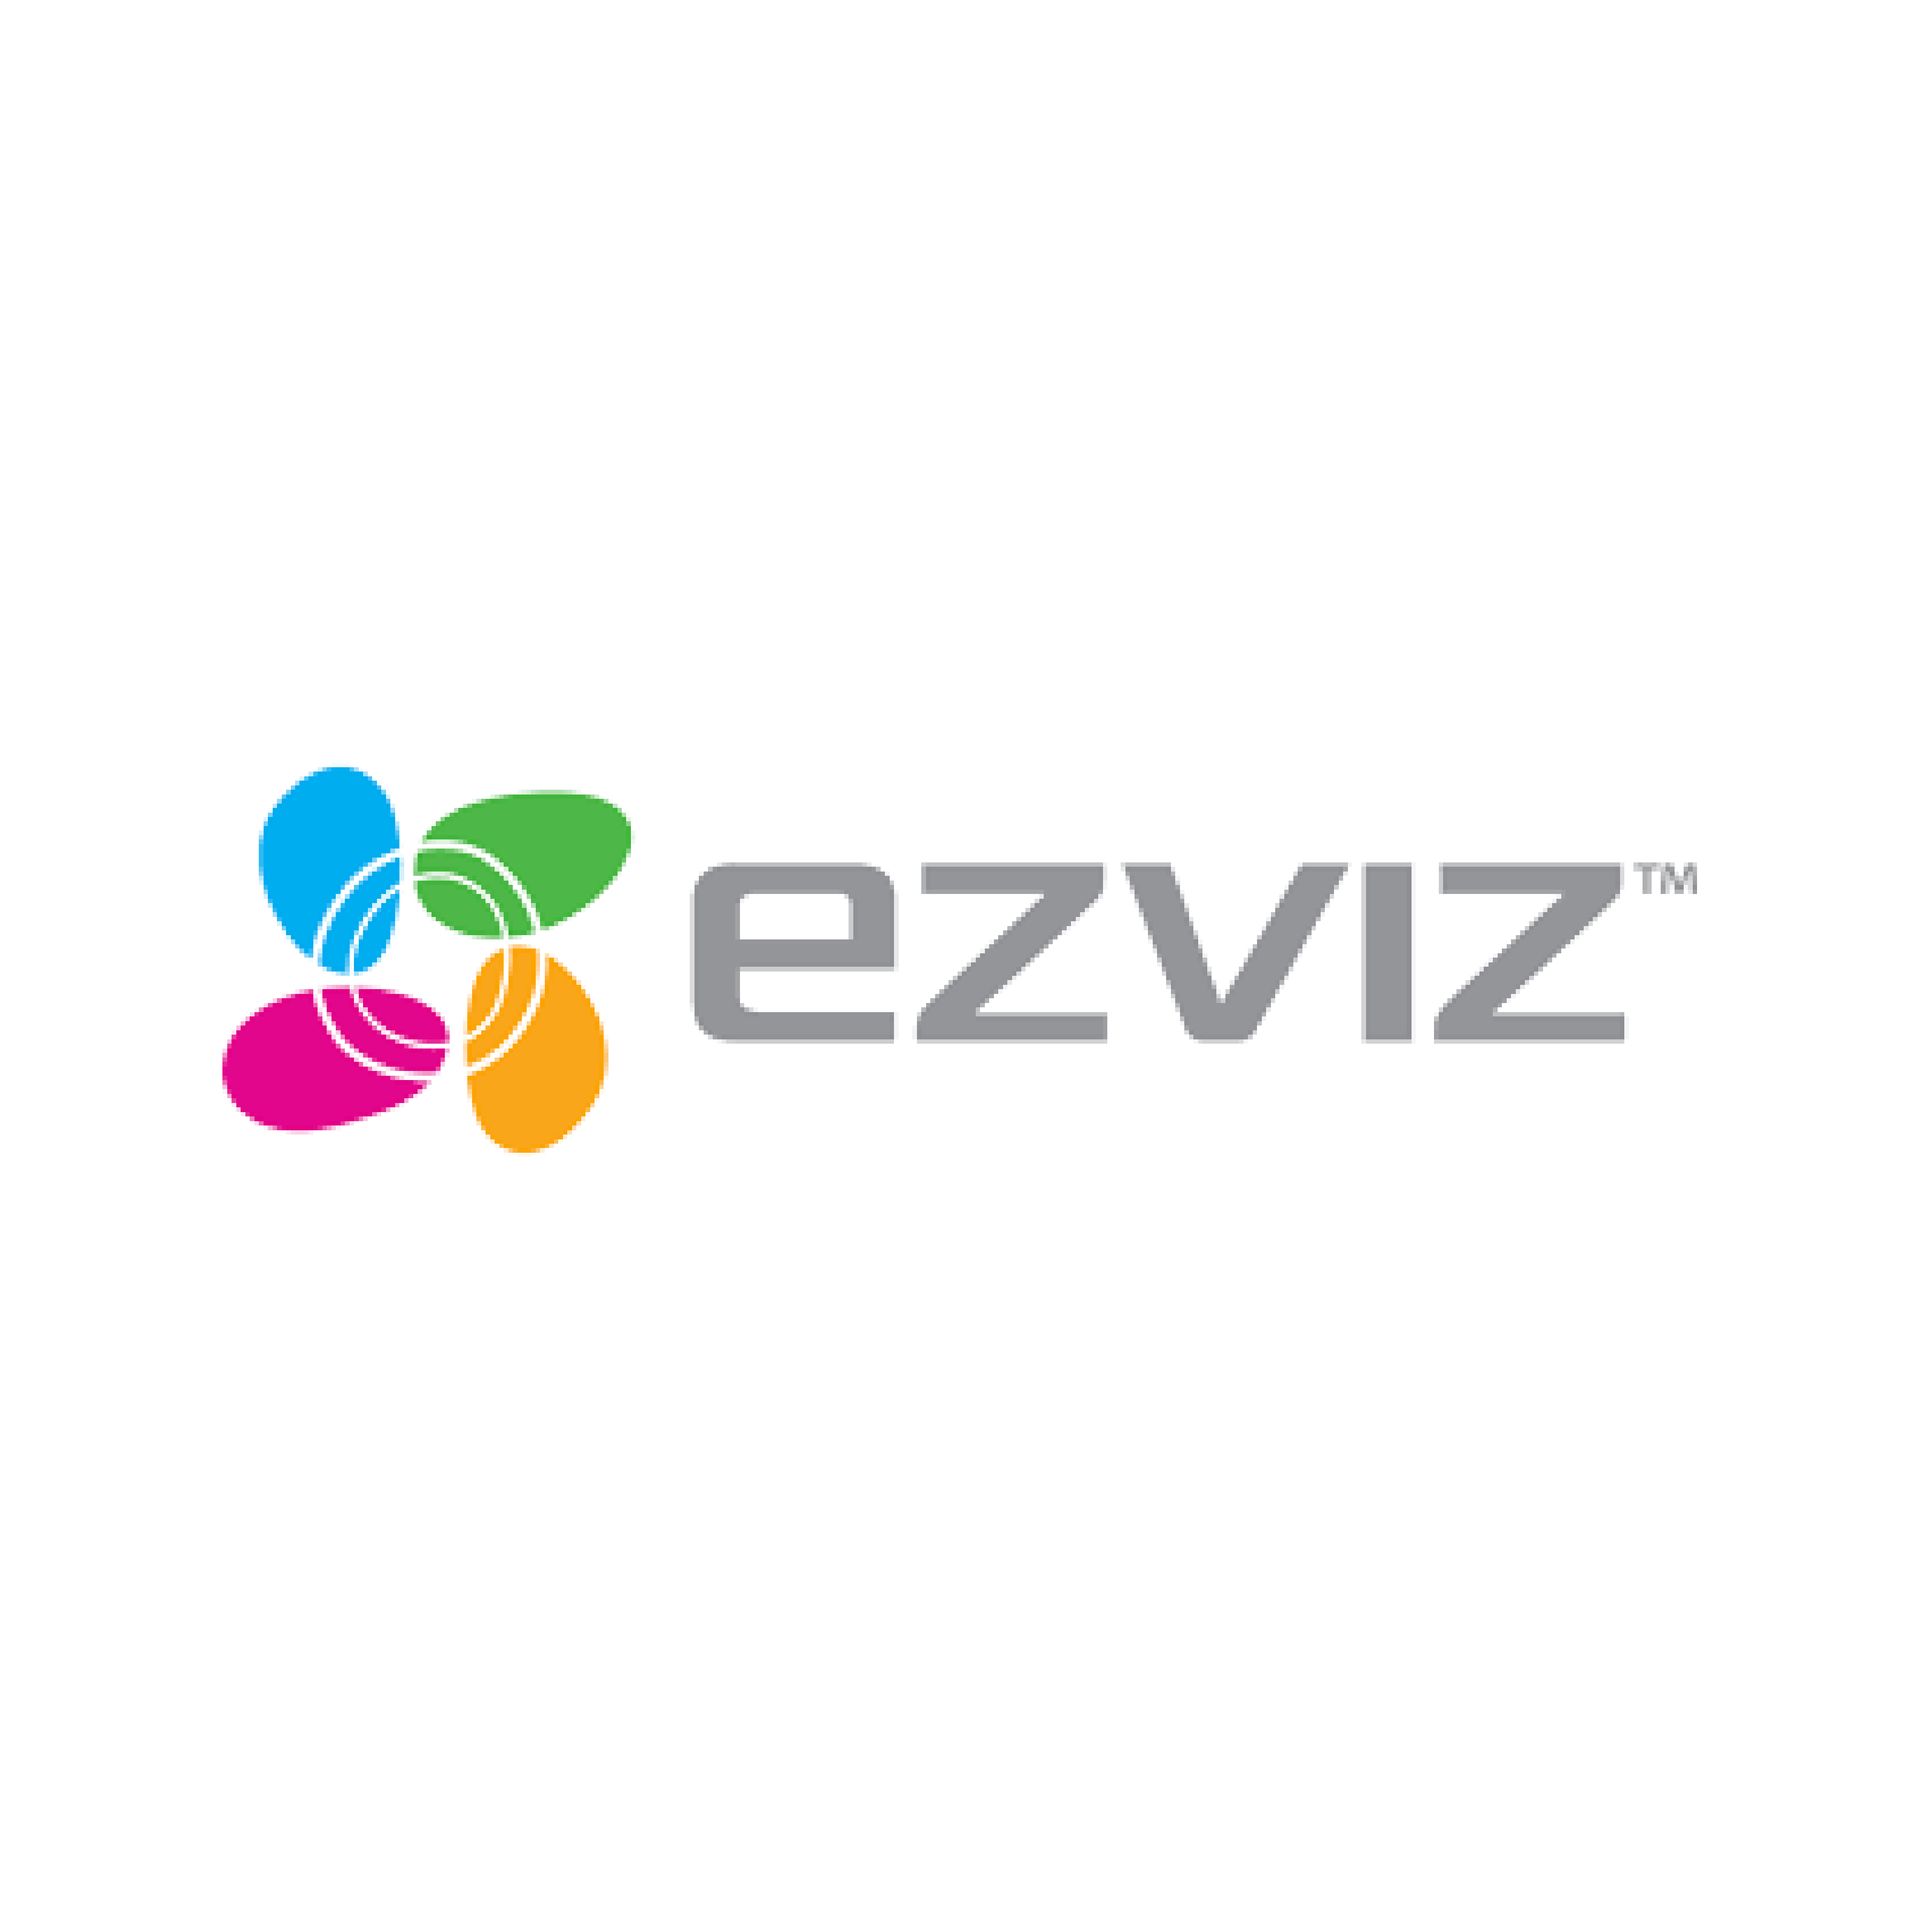 Mirilla inteligente  Ezviz DP2C, FHD, 4.3, Wi-Fi, Videoportero